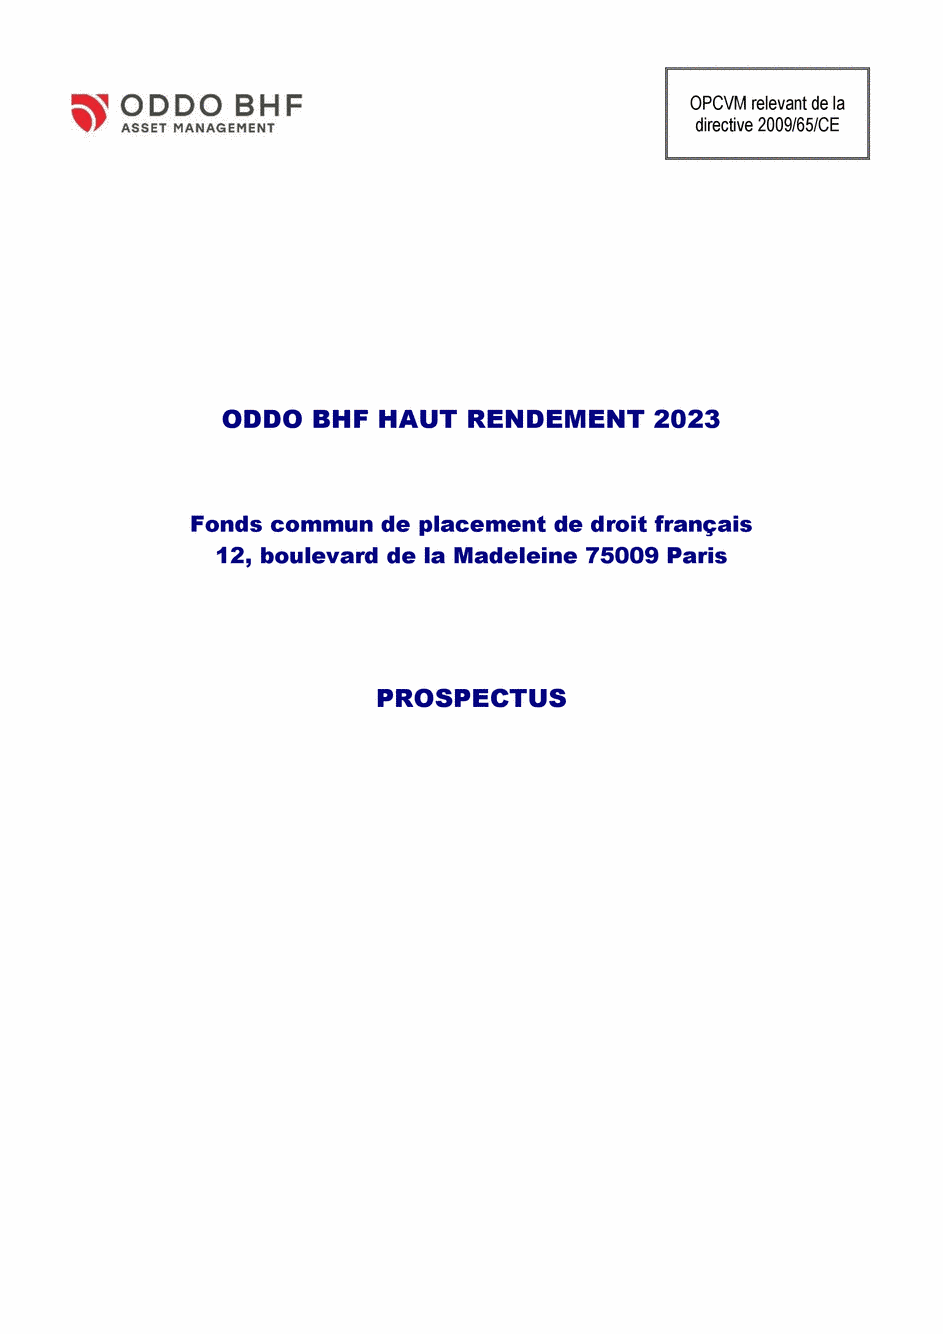 Prospectus ODDO BHF HAUT RENDEMENT 2023 DI-EUR - 25/09/2020 - Français